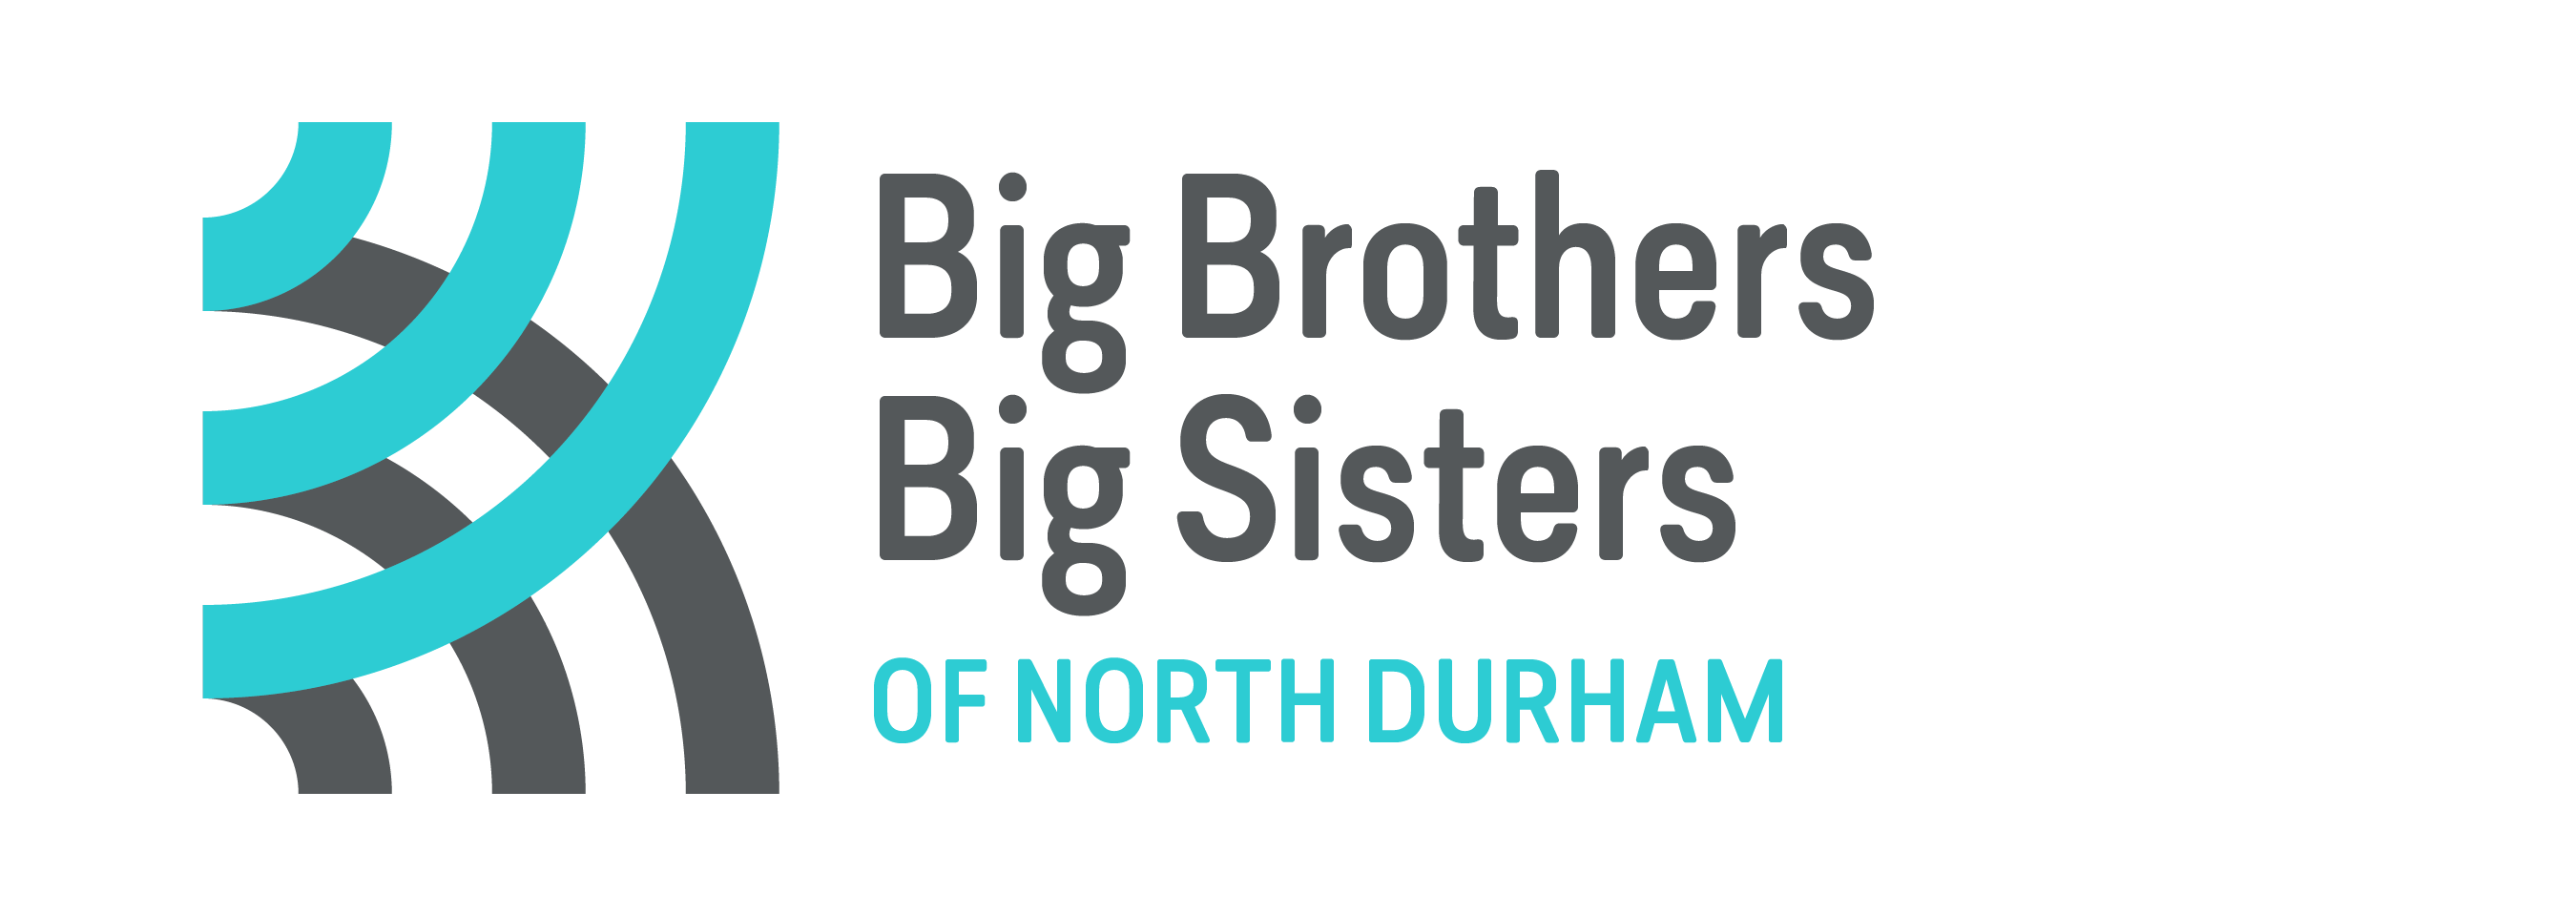 Big Brothers Big Sisters North-Durham logo